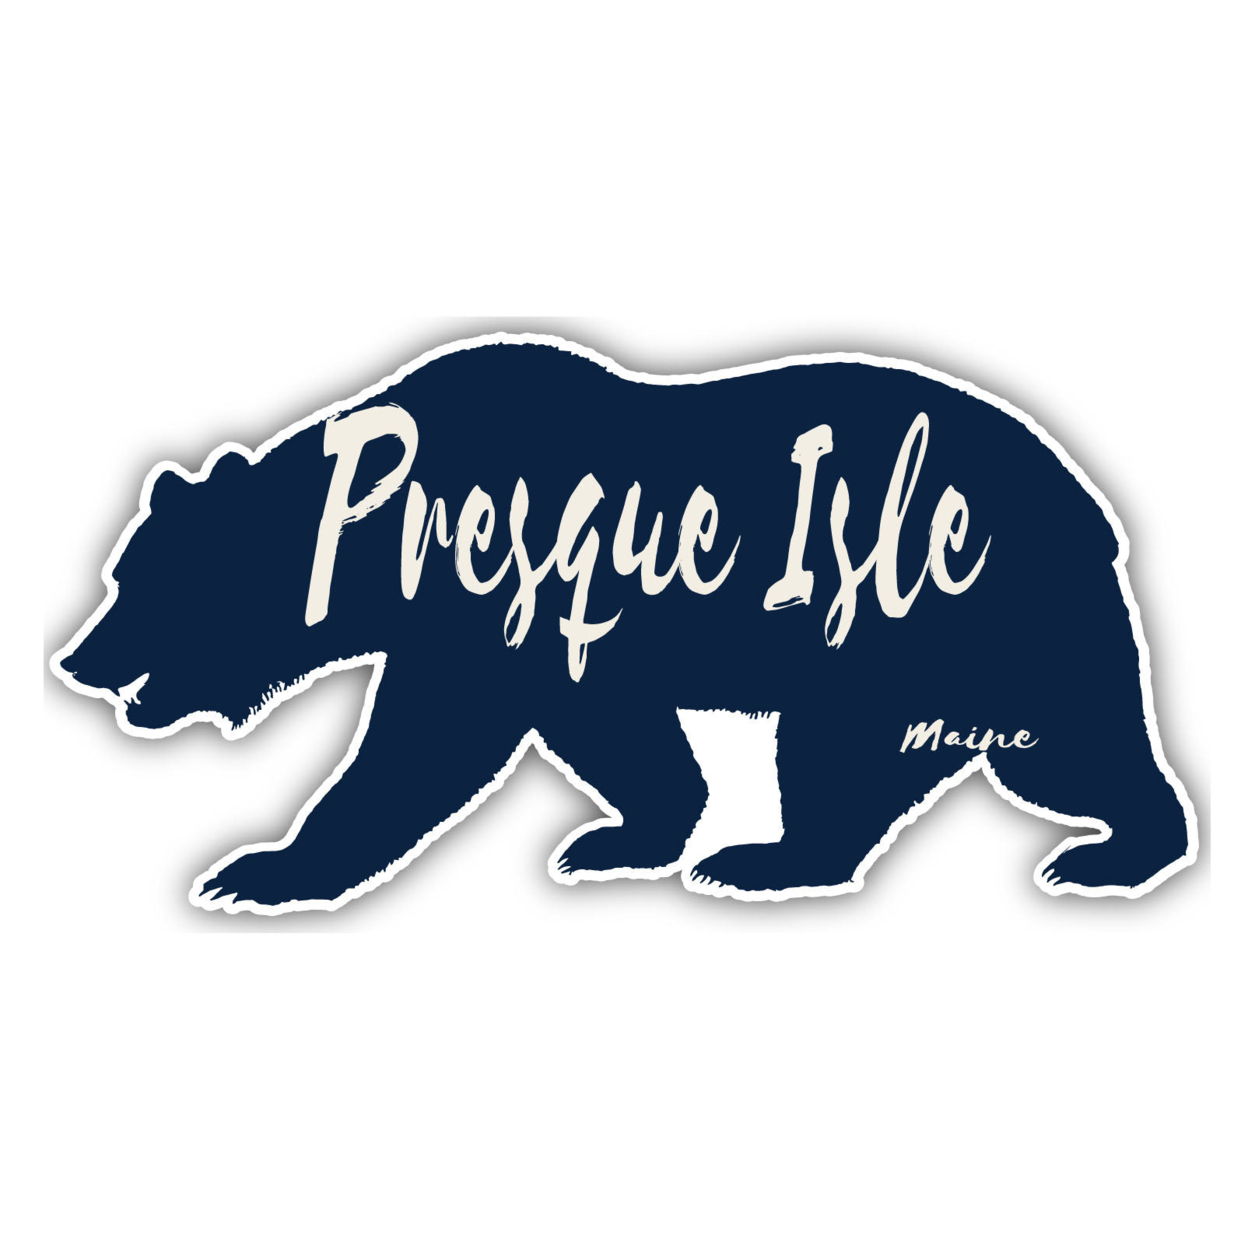 Presque Isle Maine Souvenir Decorative Stickers (Choose Theme And Size) - Single Unit, 4-Inch, Tent